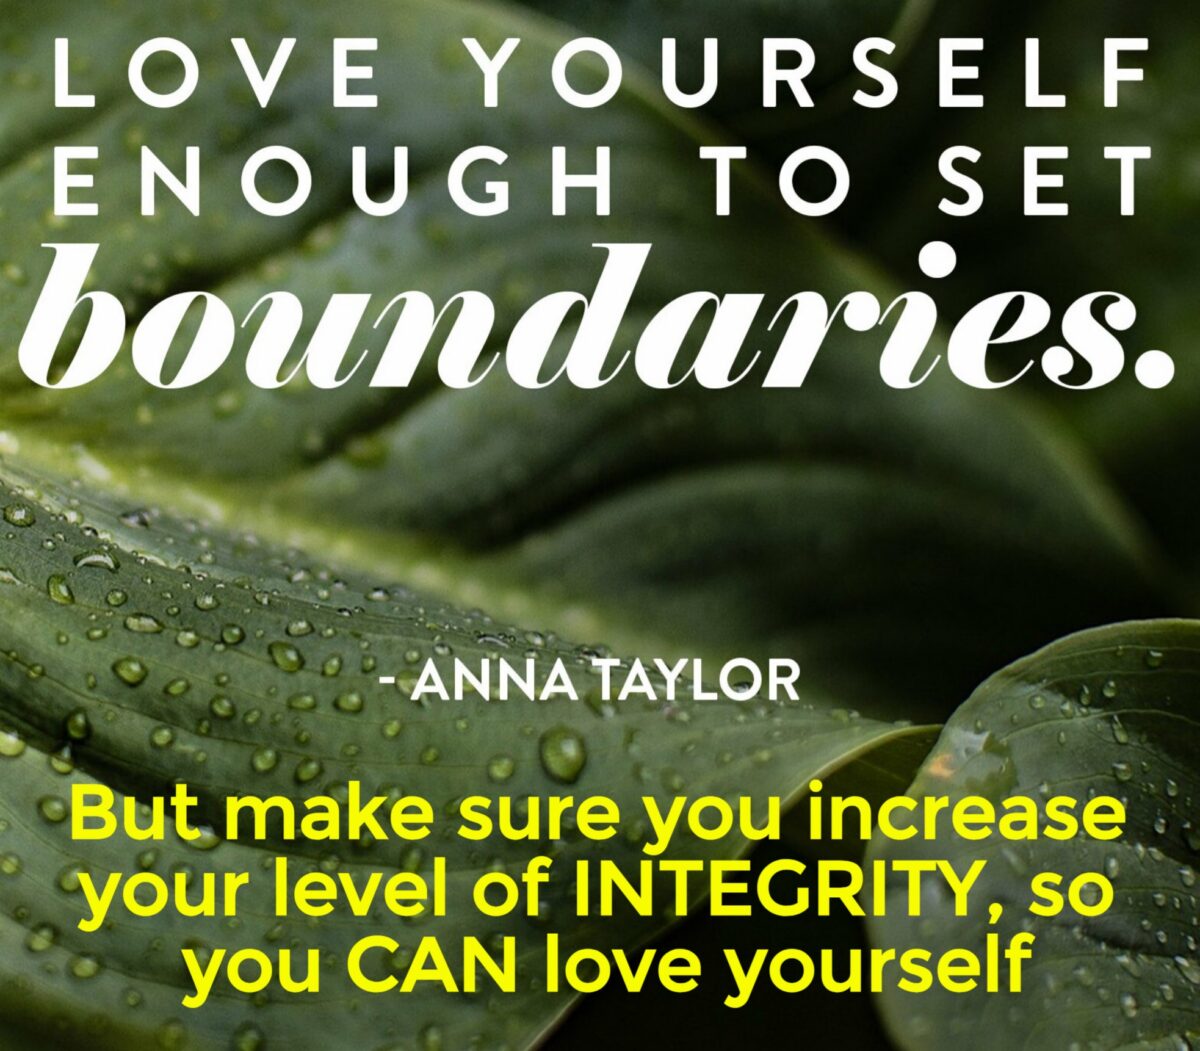 Do you have boundaries? Do you even NEED boundaries?